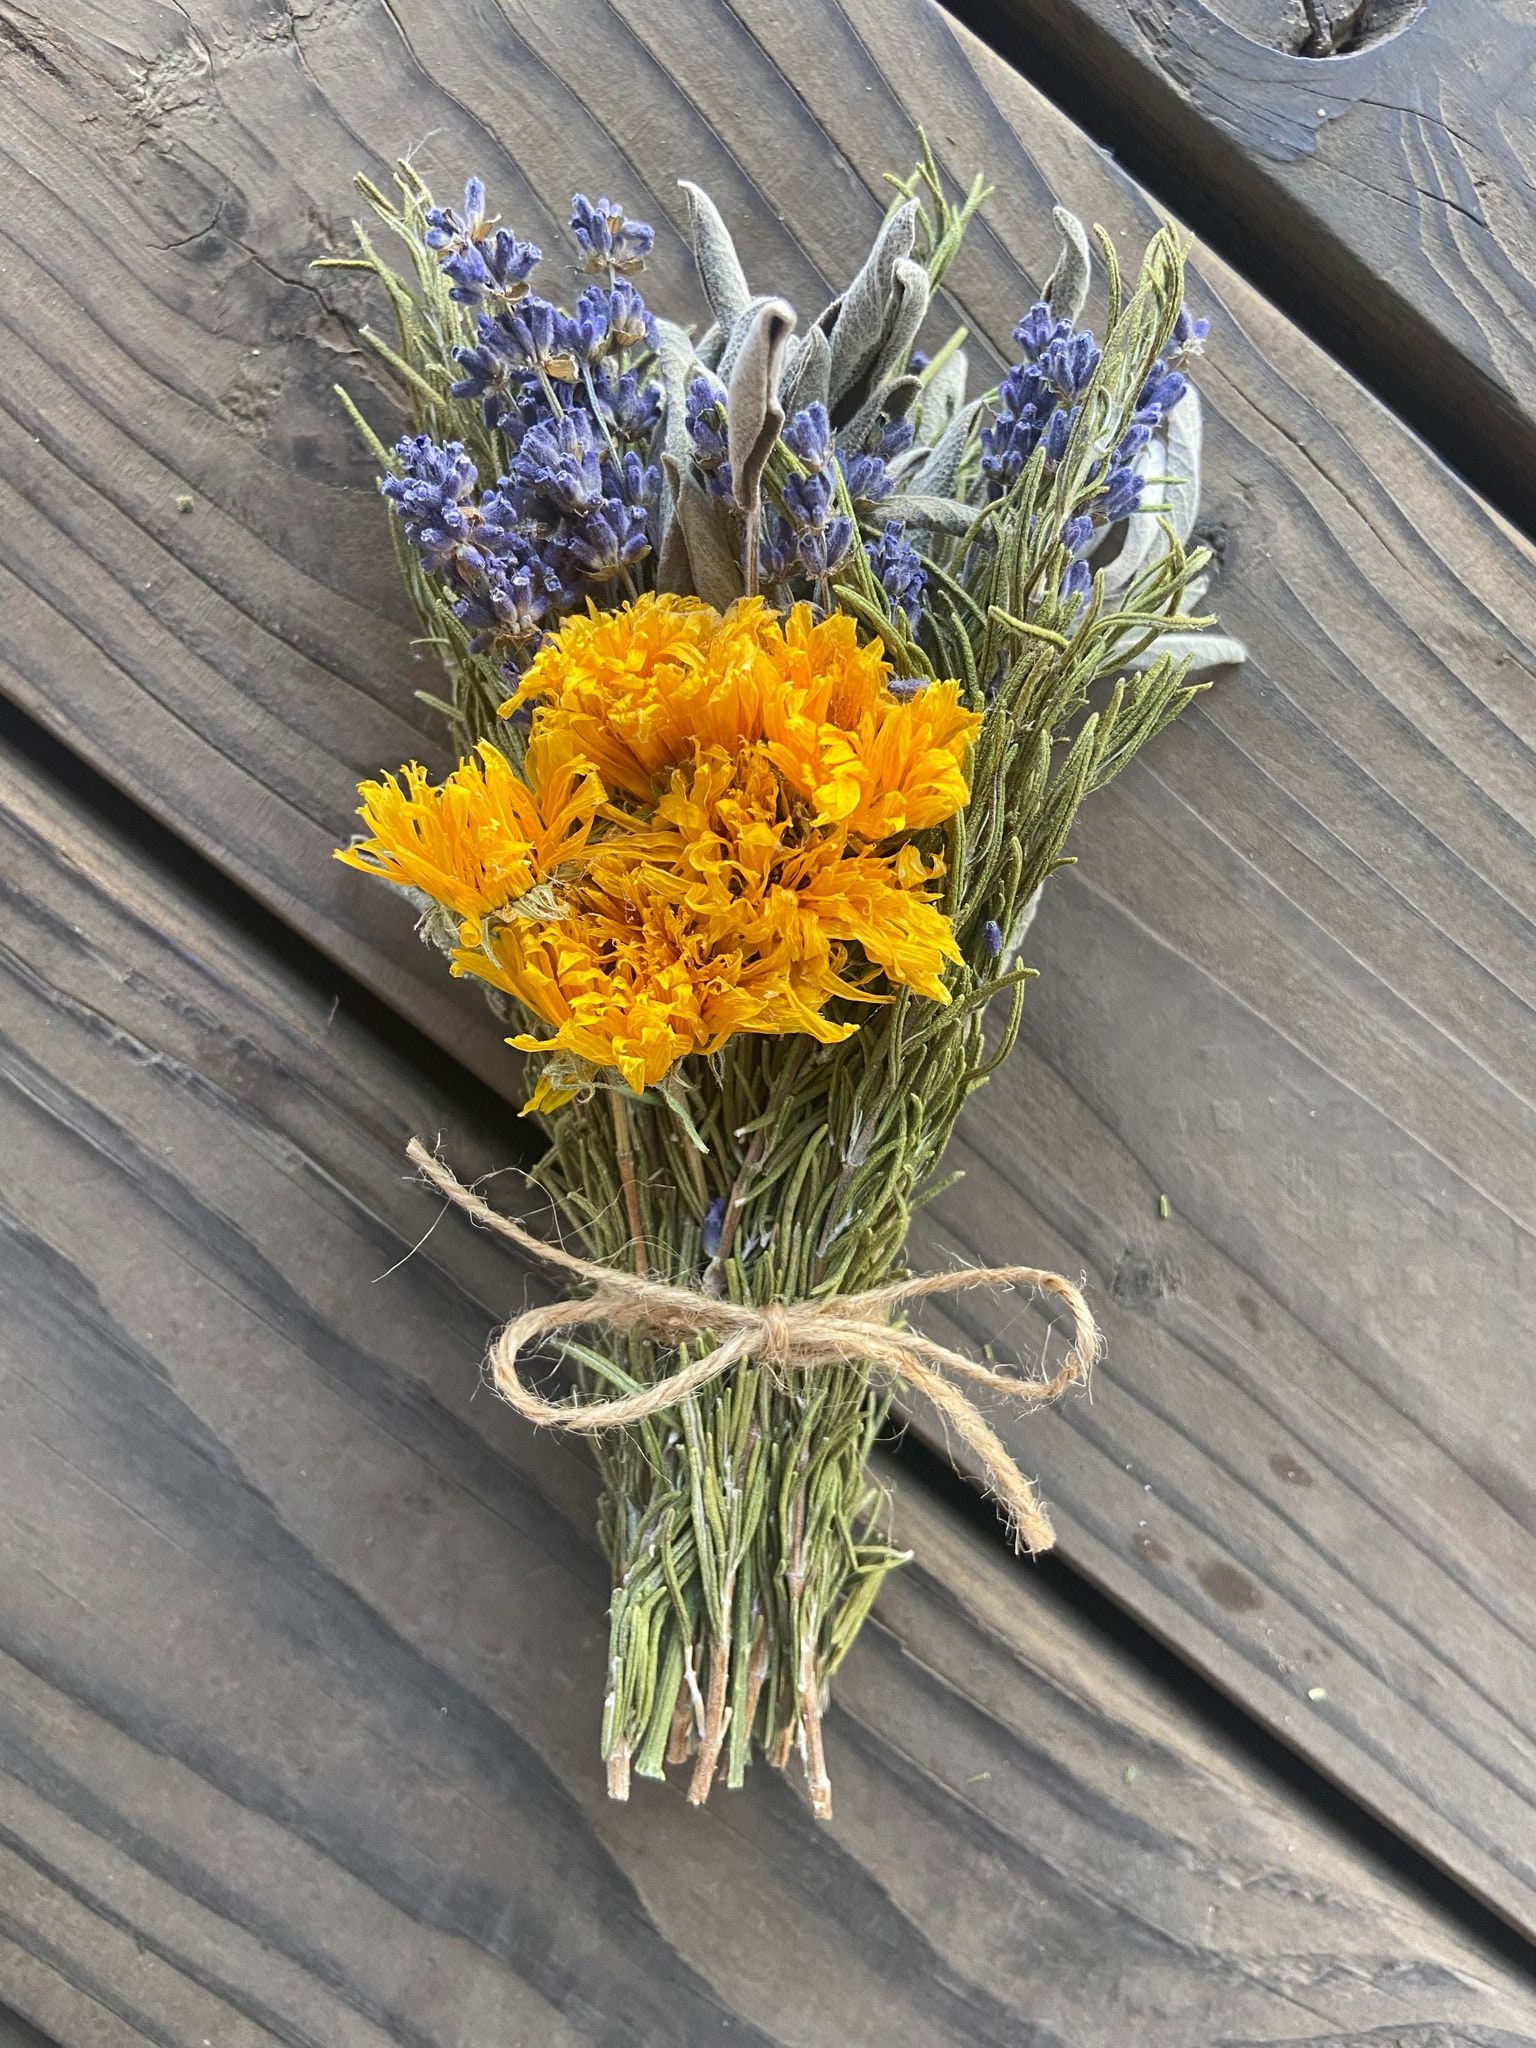 Dried Herbs and Lavender Flower Bundles